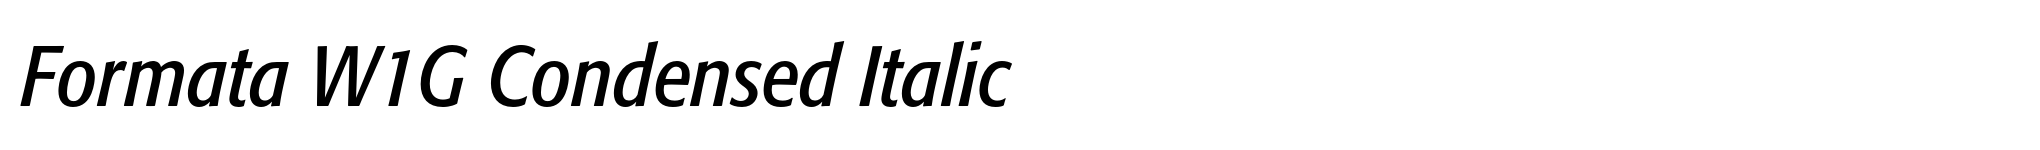 Formata W1G Condensed Italic image